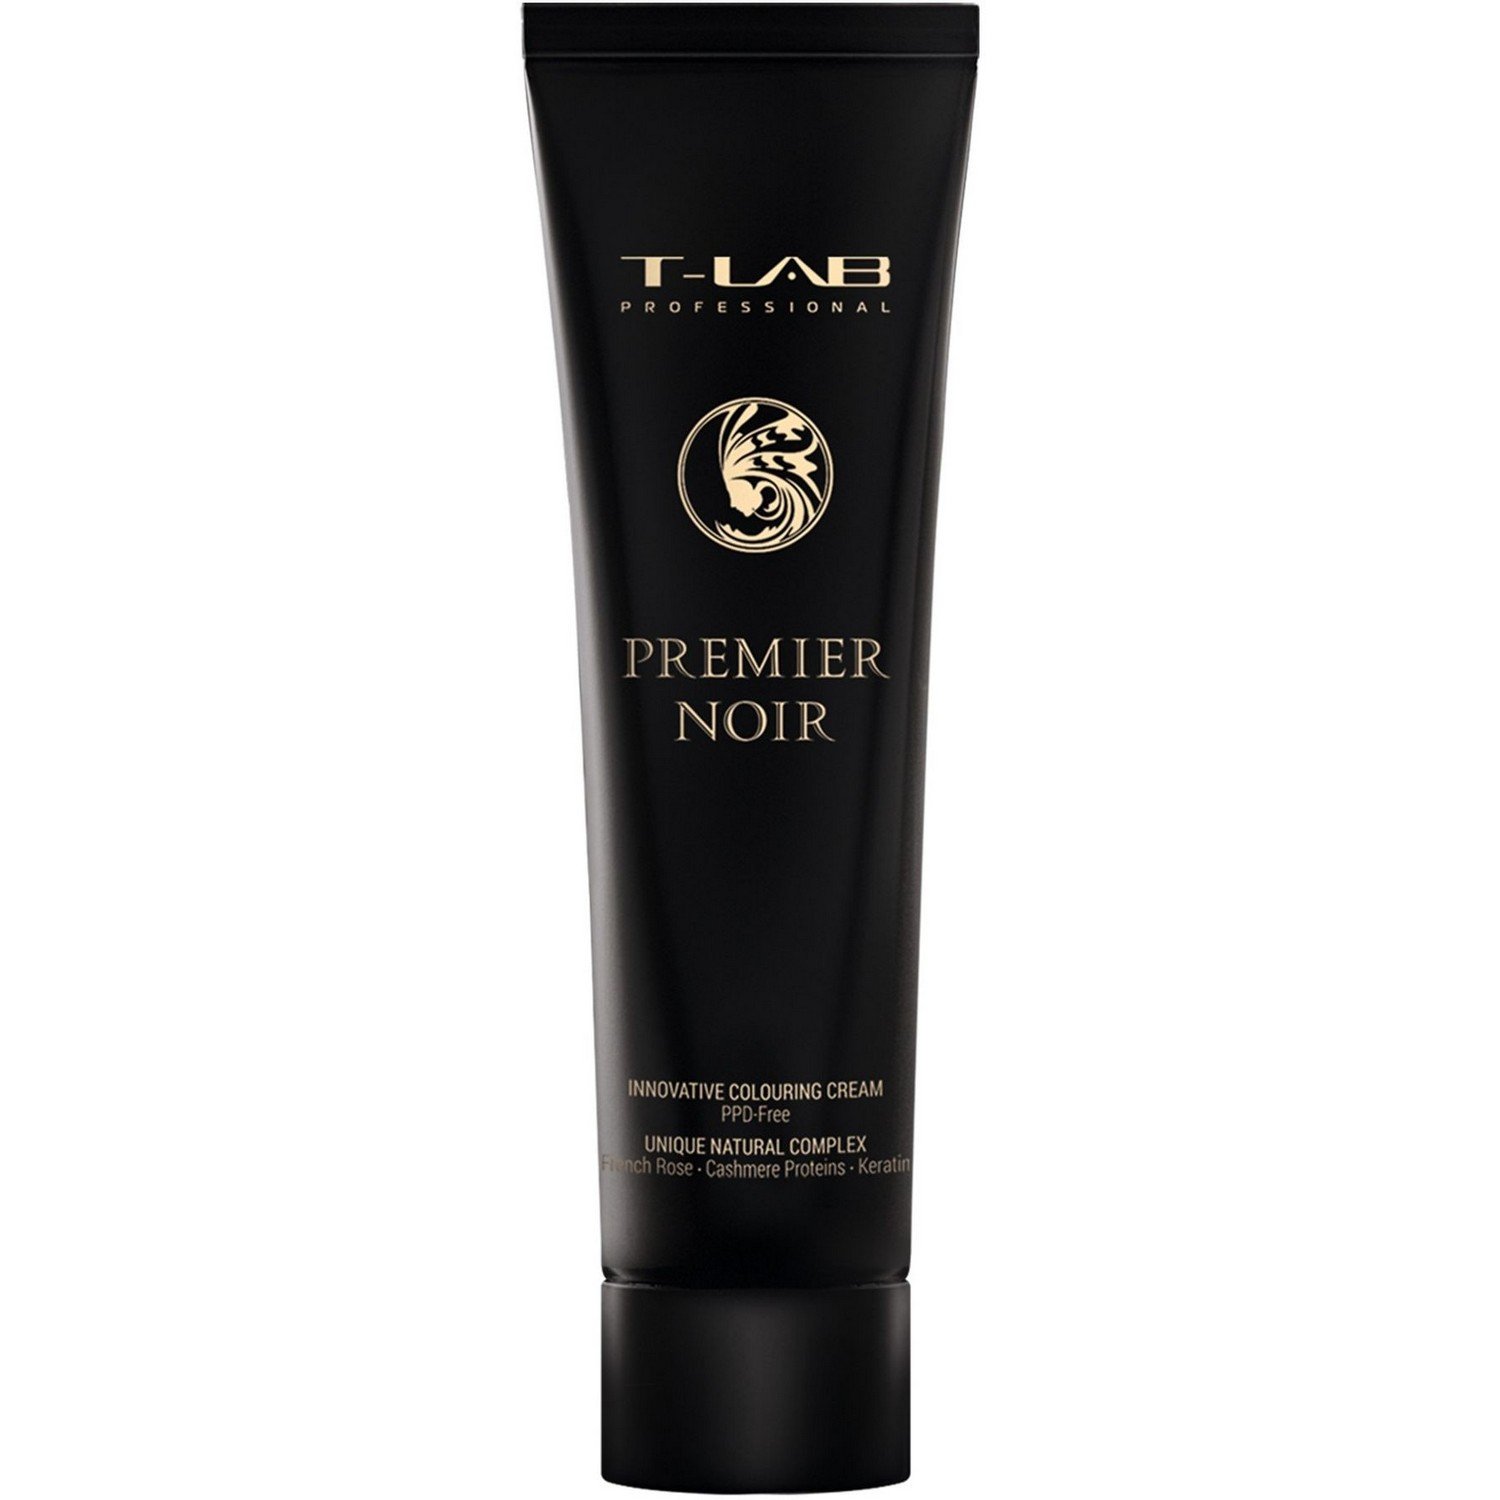 Крем-краска T-LAB Professional Premier Noir colouring cream, оттенок 7.44 (deep copper blonde) - фото 1